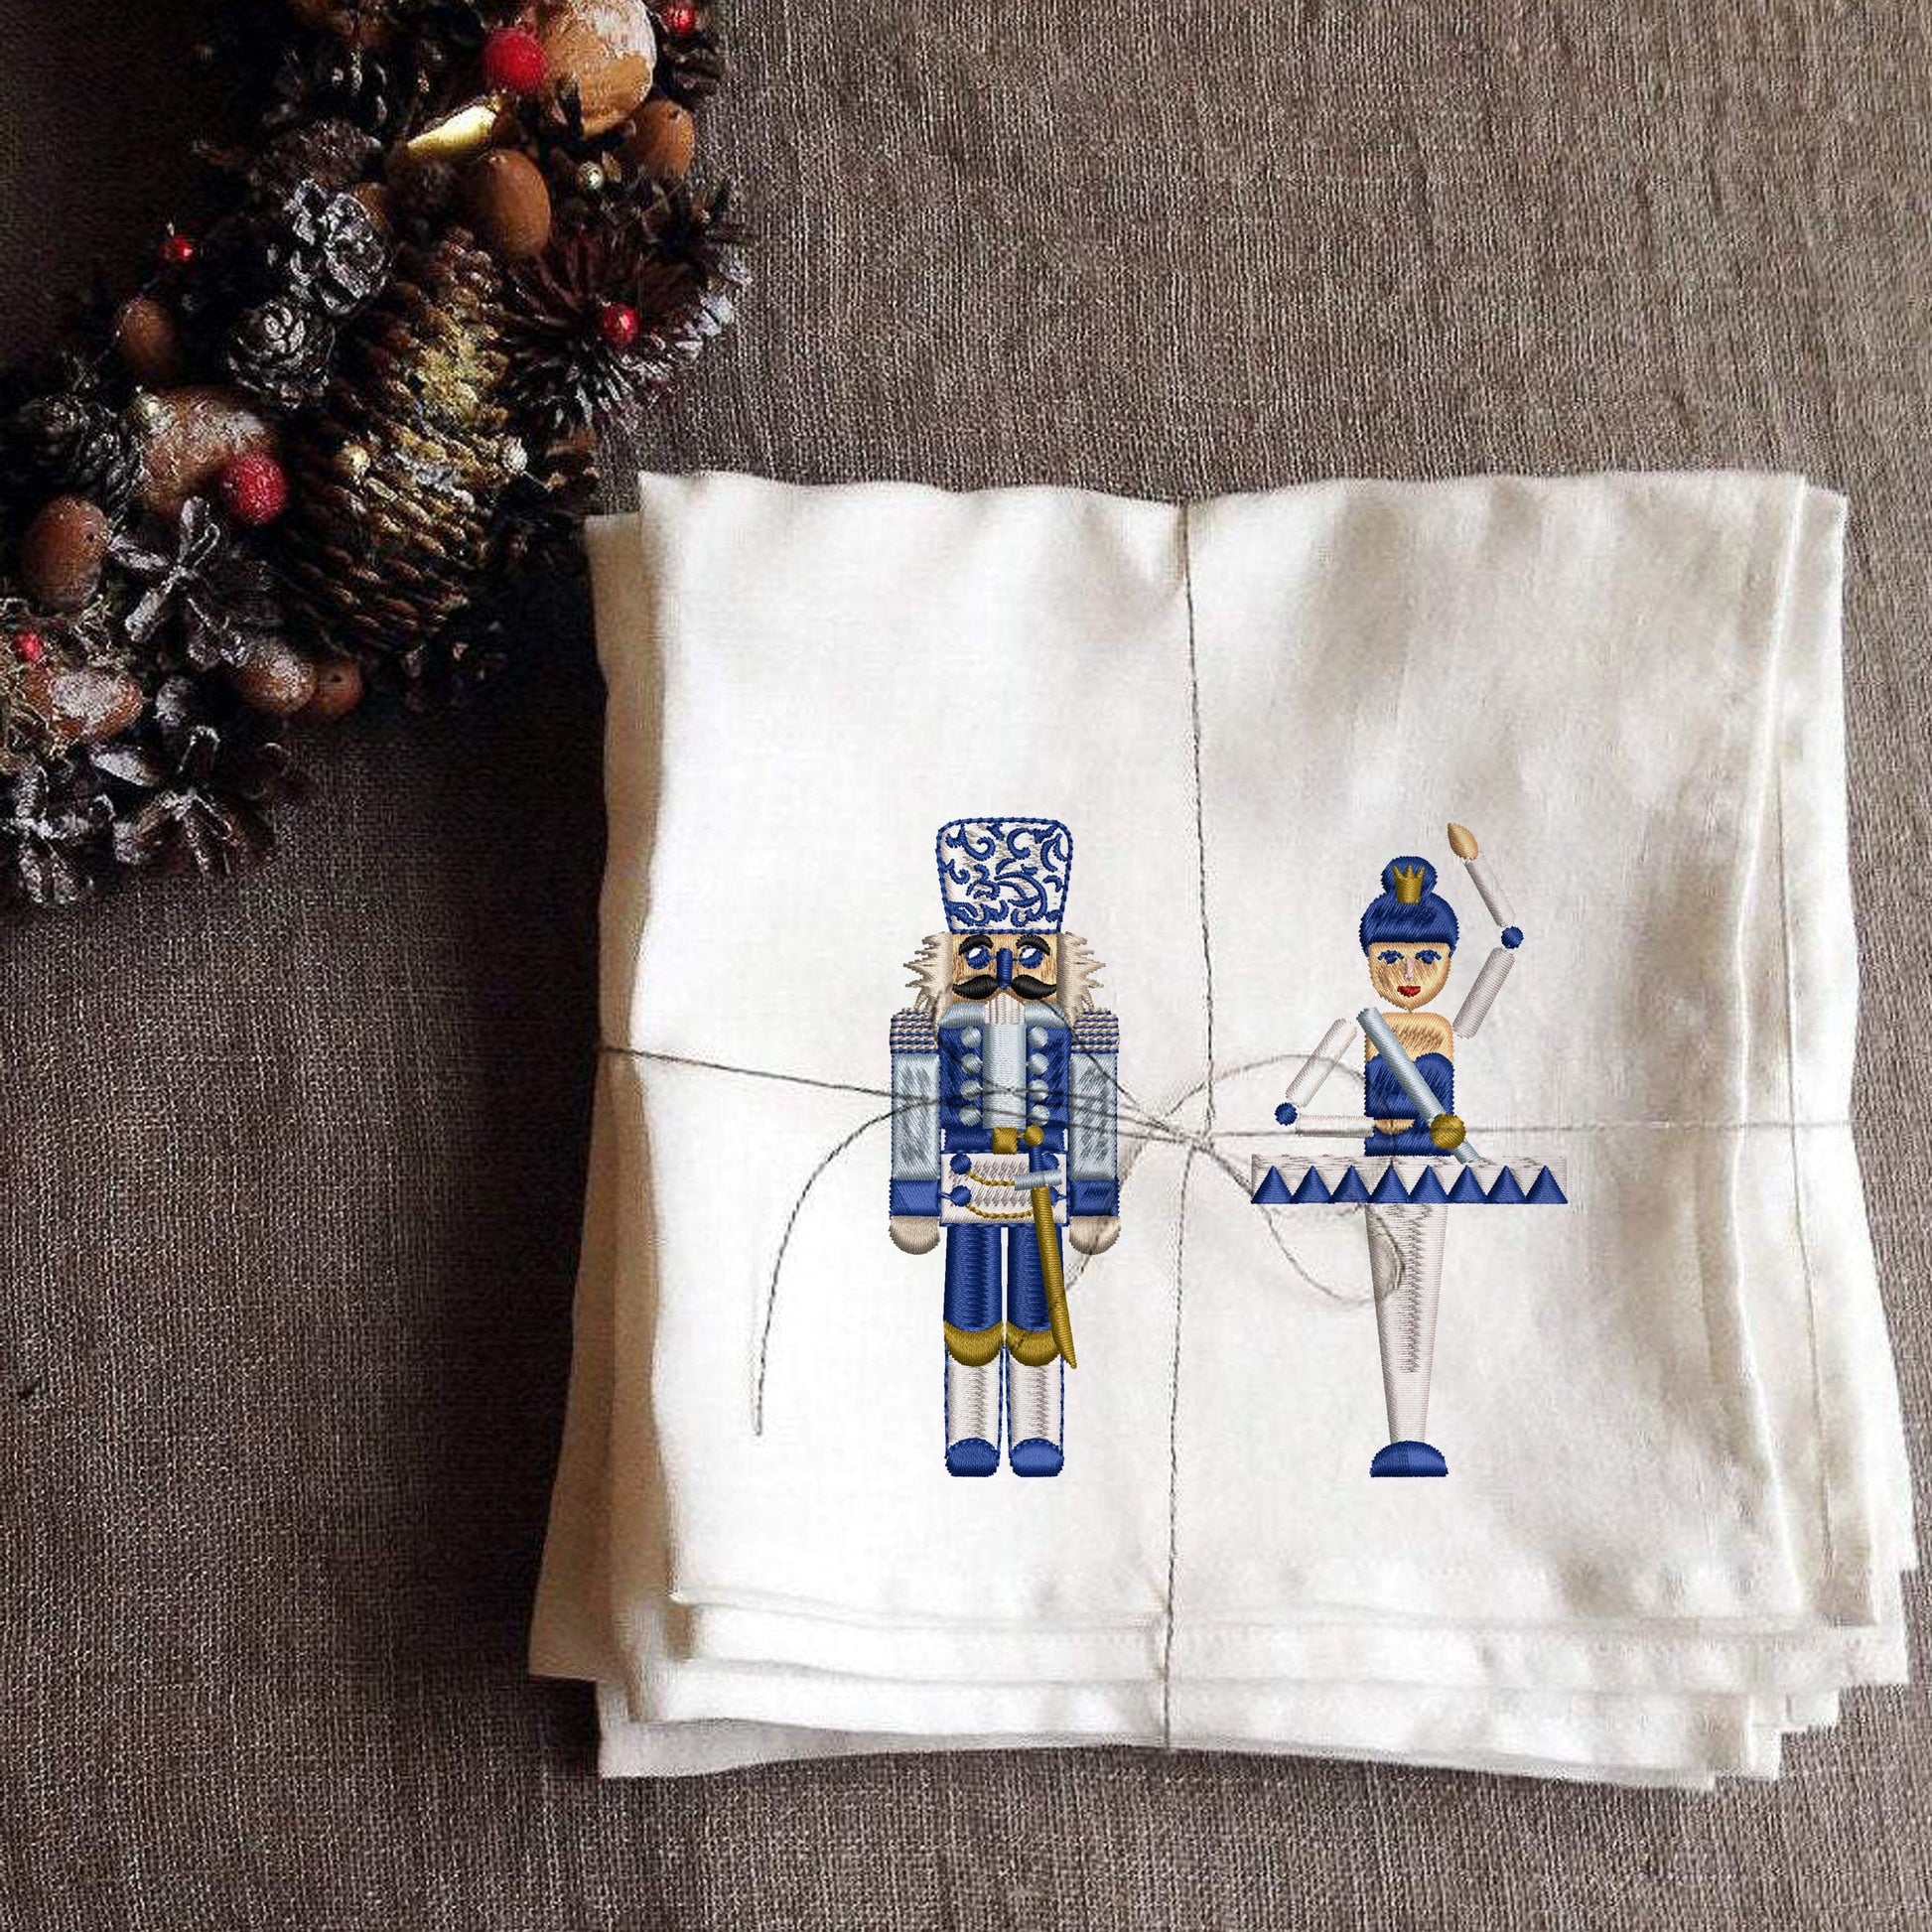 Christmas Nutcracker and Ballerina machine embroidery design set on napkin